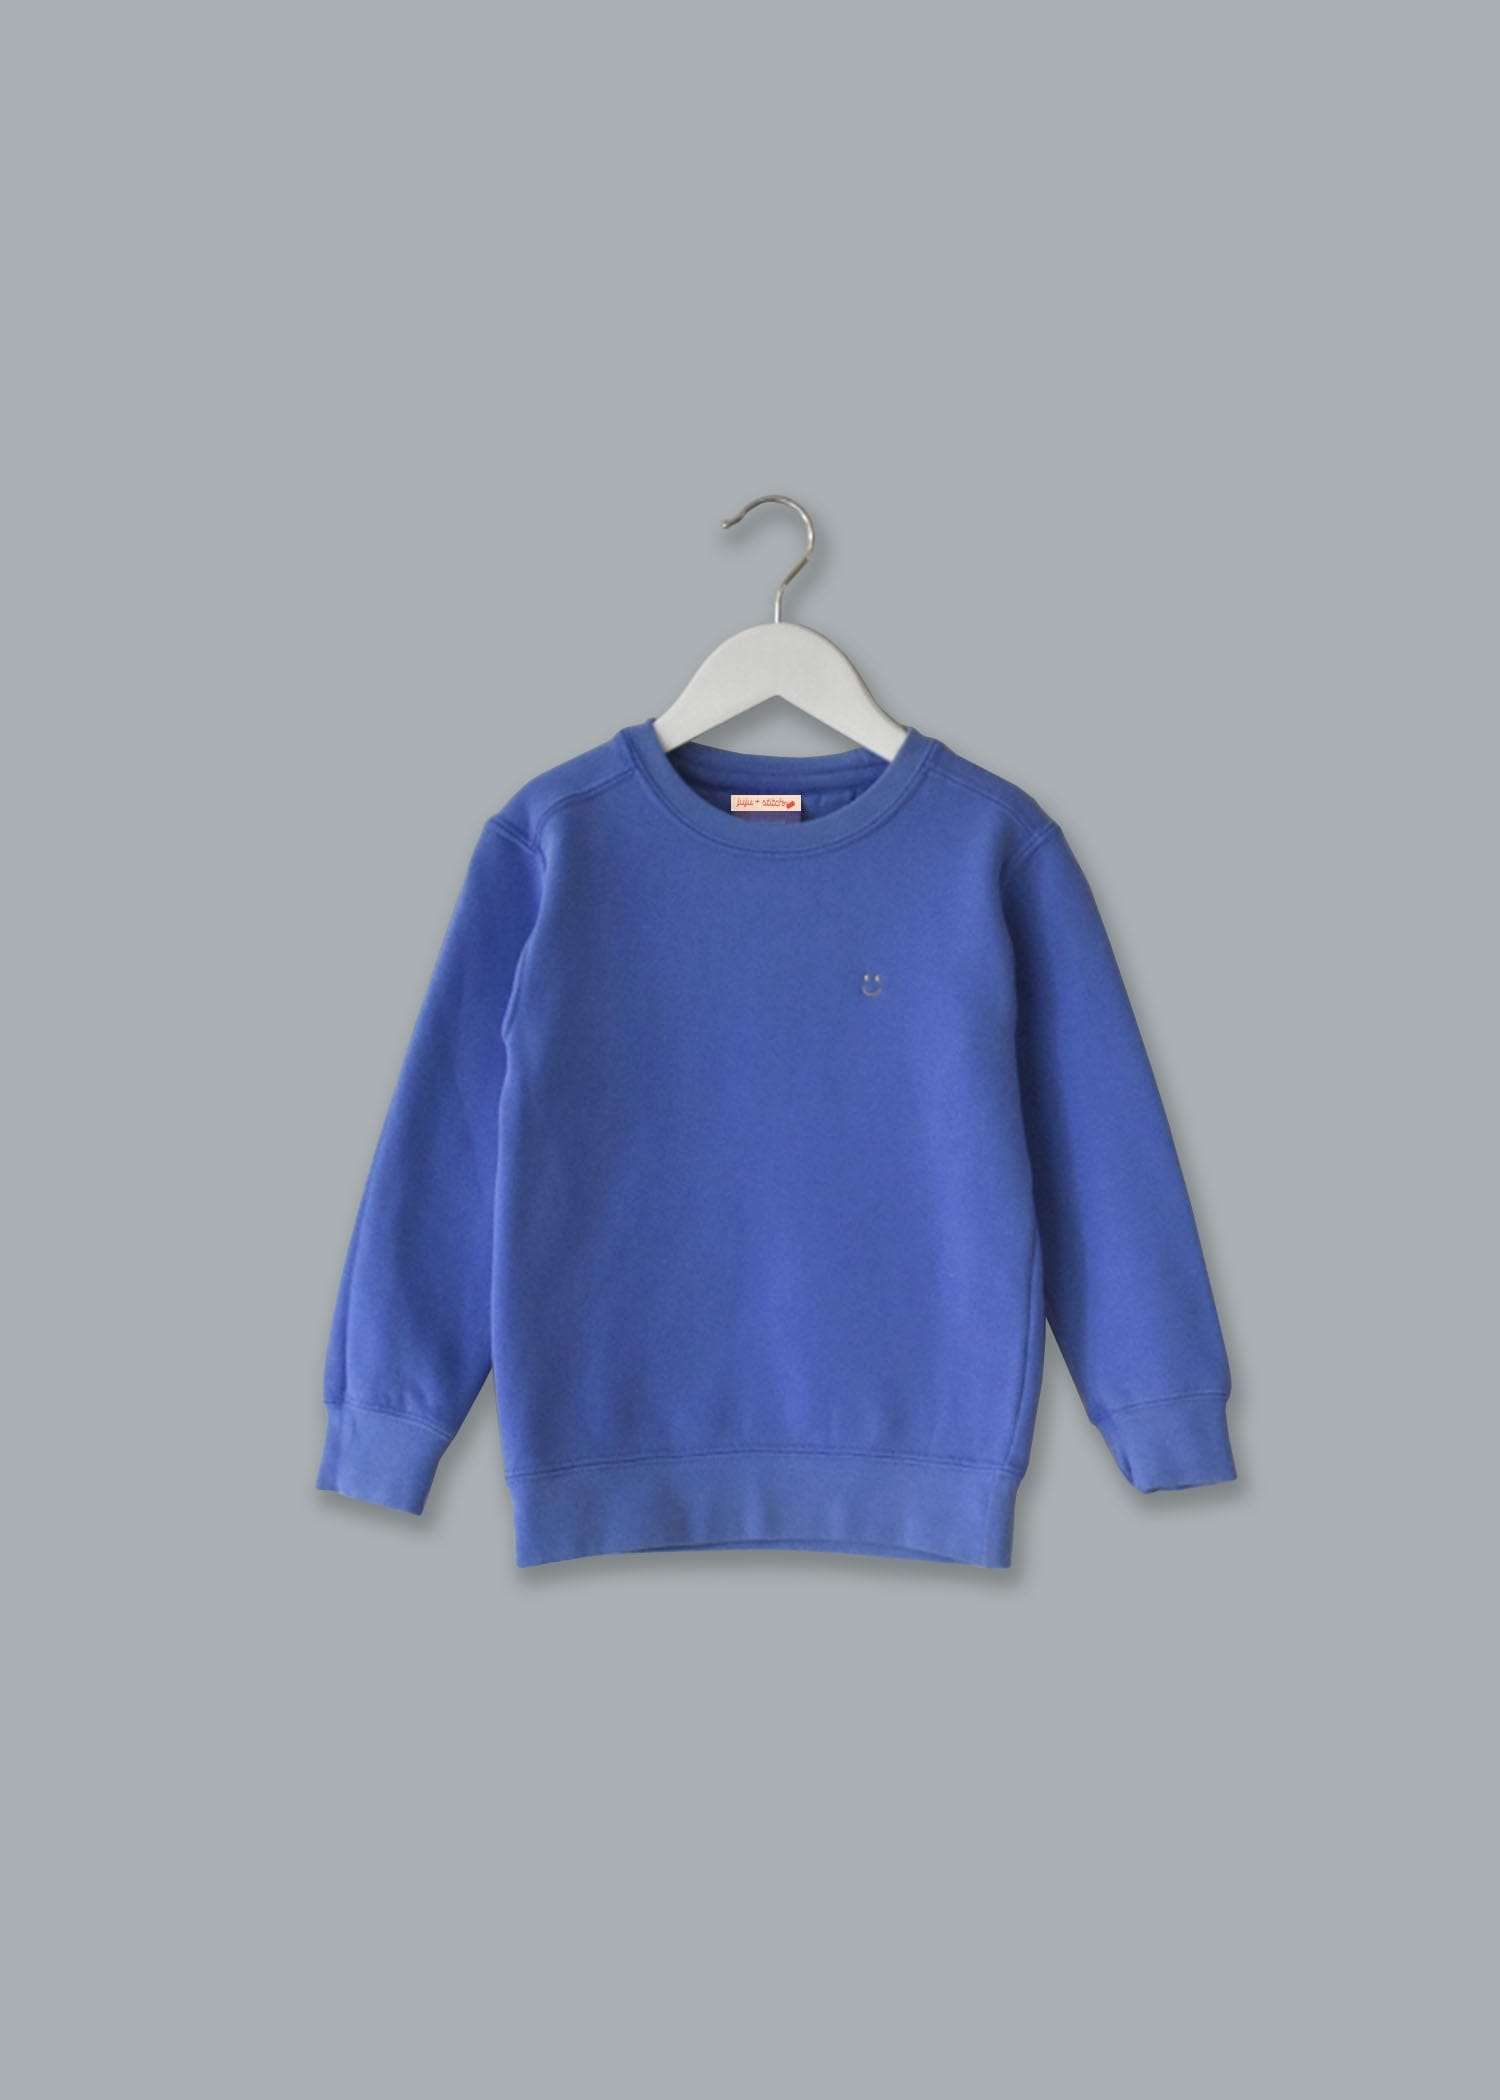 JuJu + Stitch Adult VintageWash Crewneck Sweatshirt